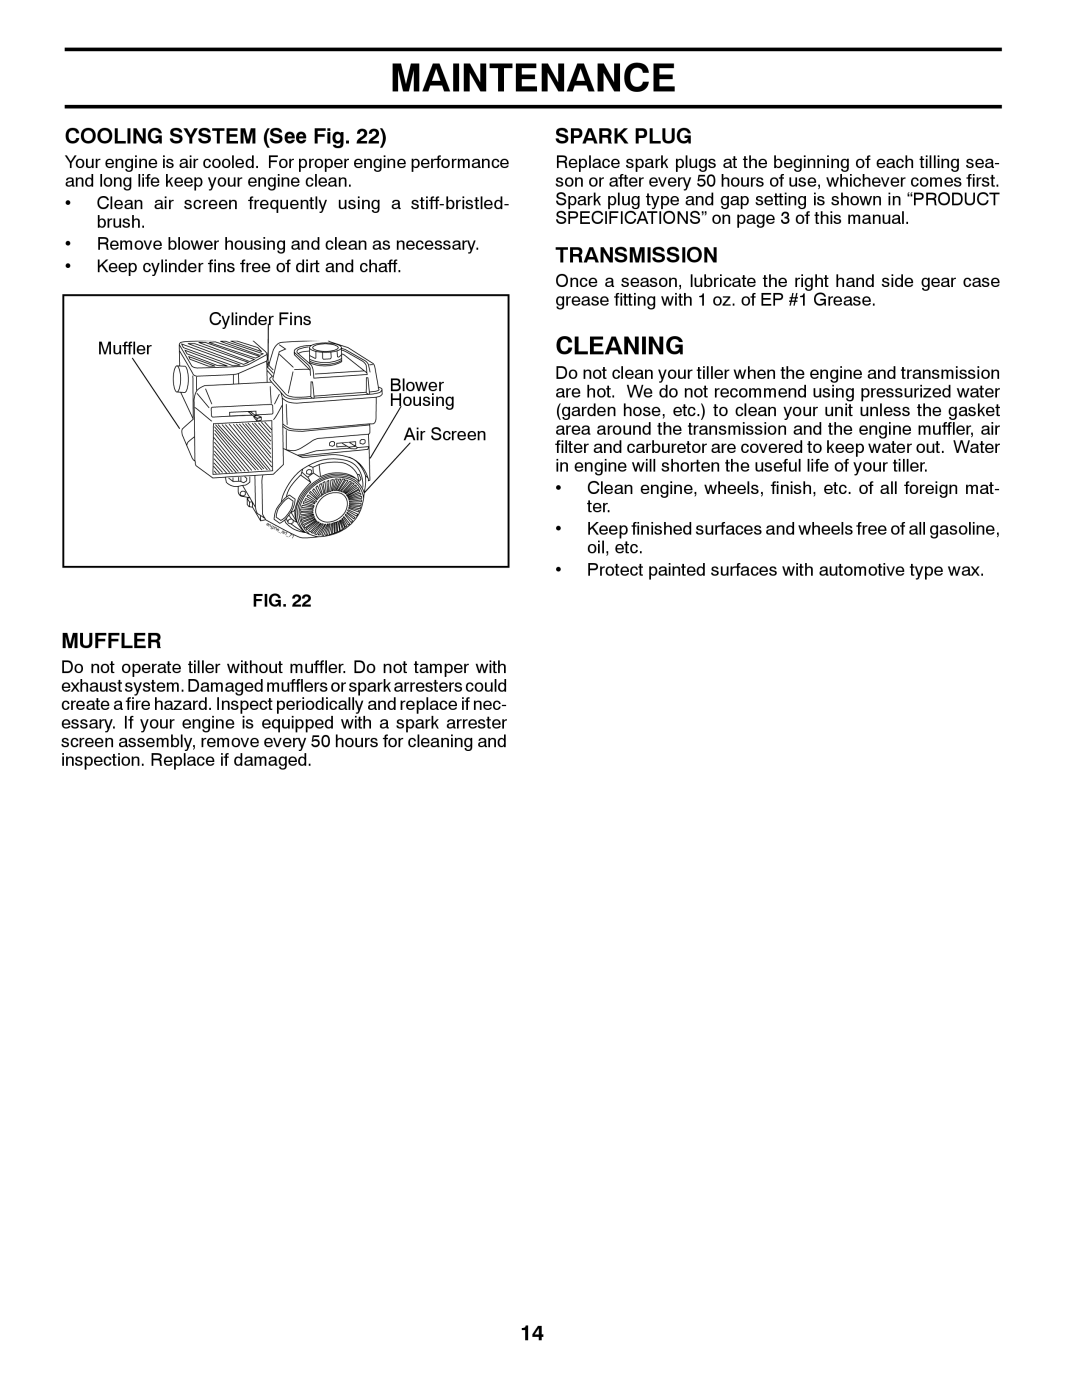 Poulan DRT875 manual Cleaning, COOLING SYSTEM See Fig, Muffler, Spark Plug, Transmission, Maintenance 